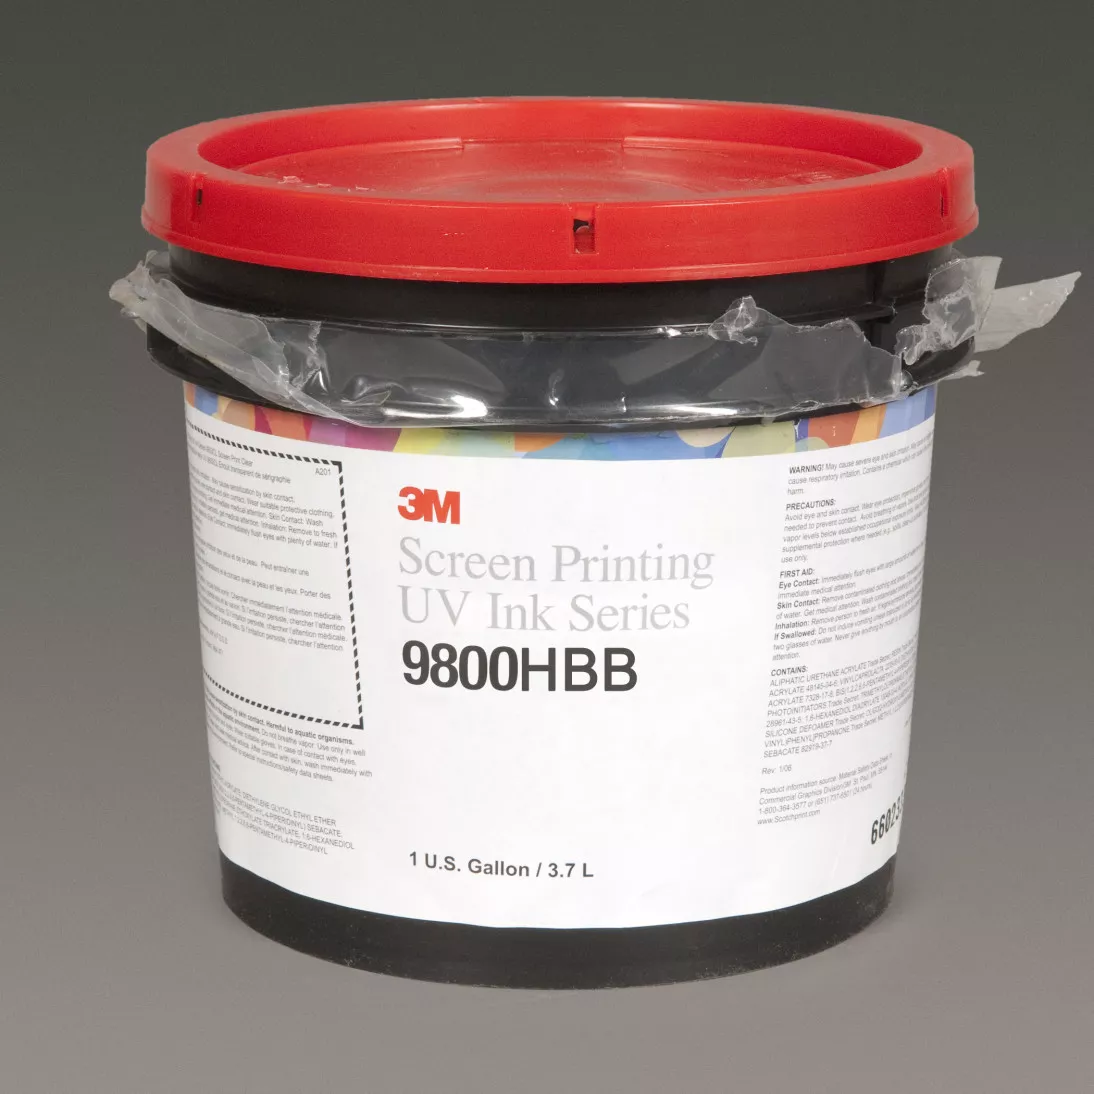 3M™ Screen Printing UV Heavy Body Halftone Base 9800HBB, 1 Gallon
Container